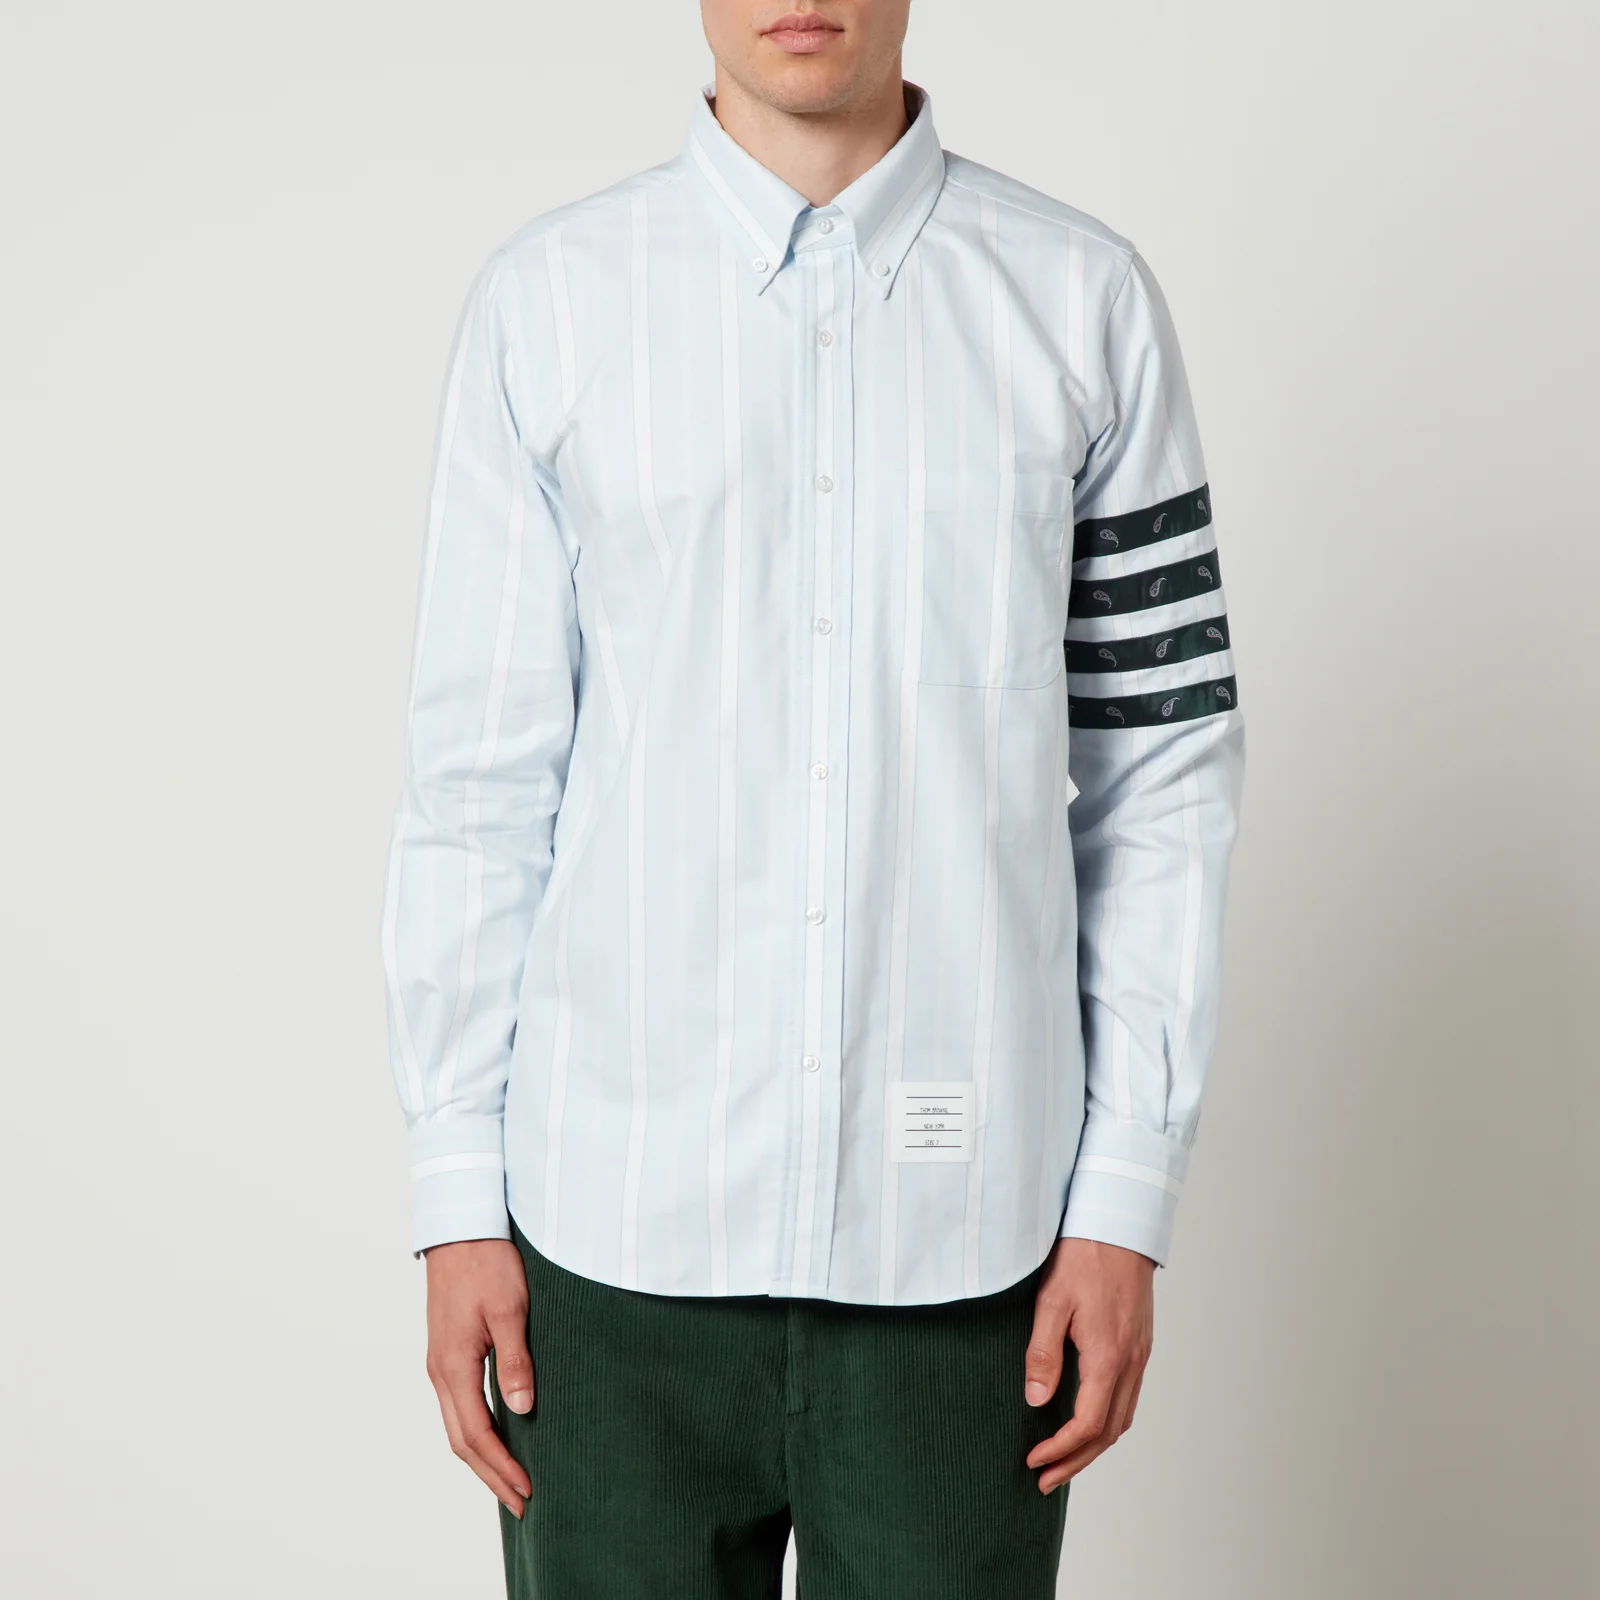 Thom Browne 4-Bar Paisley and Striped Silk Shirt - 4/XL Image 1